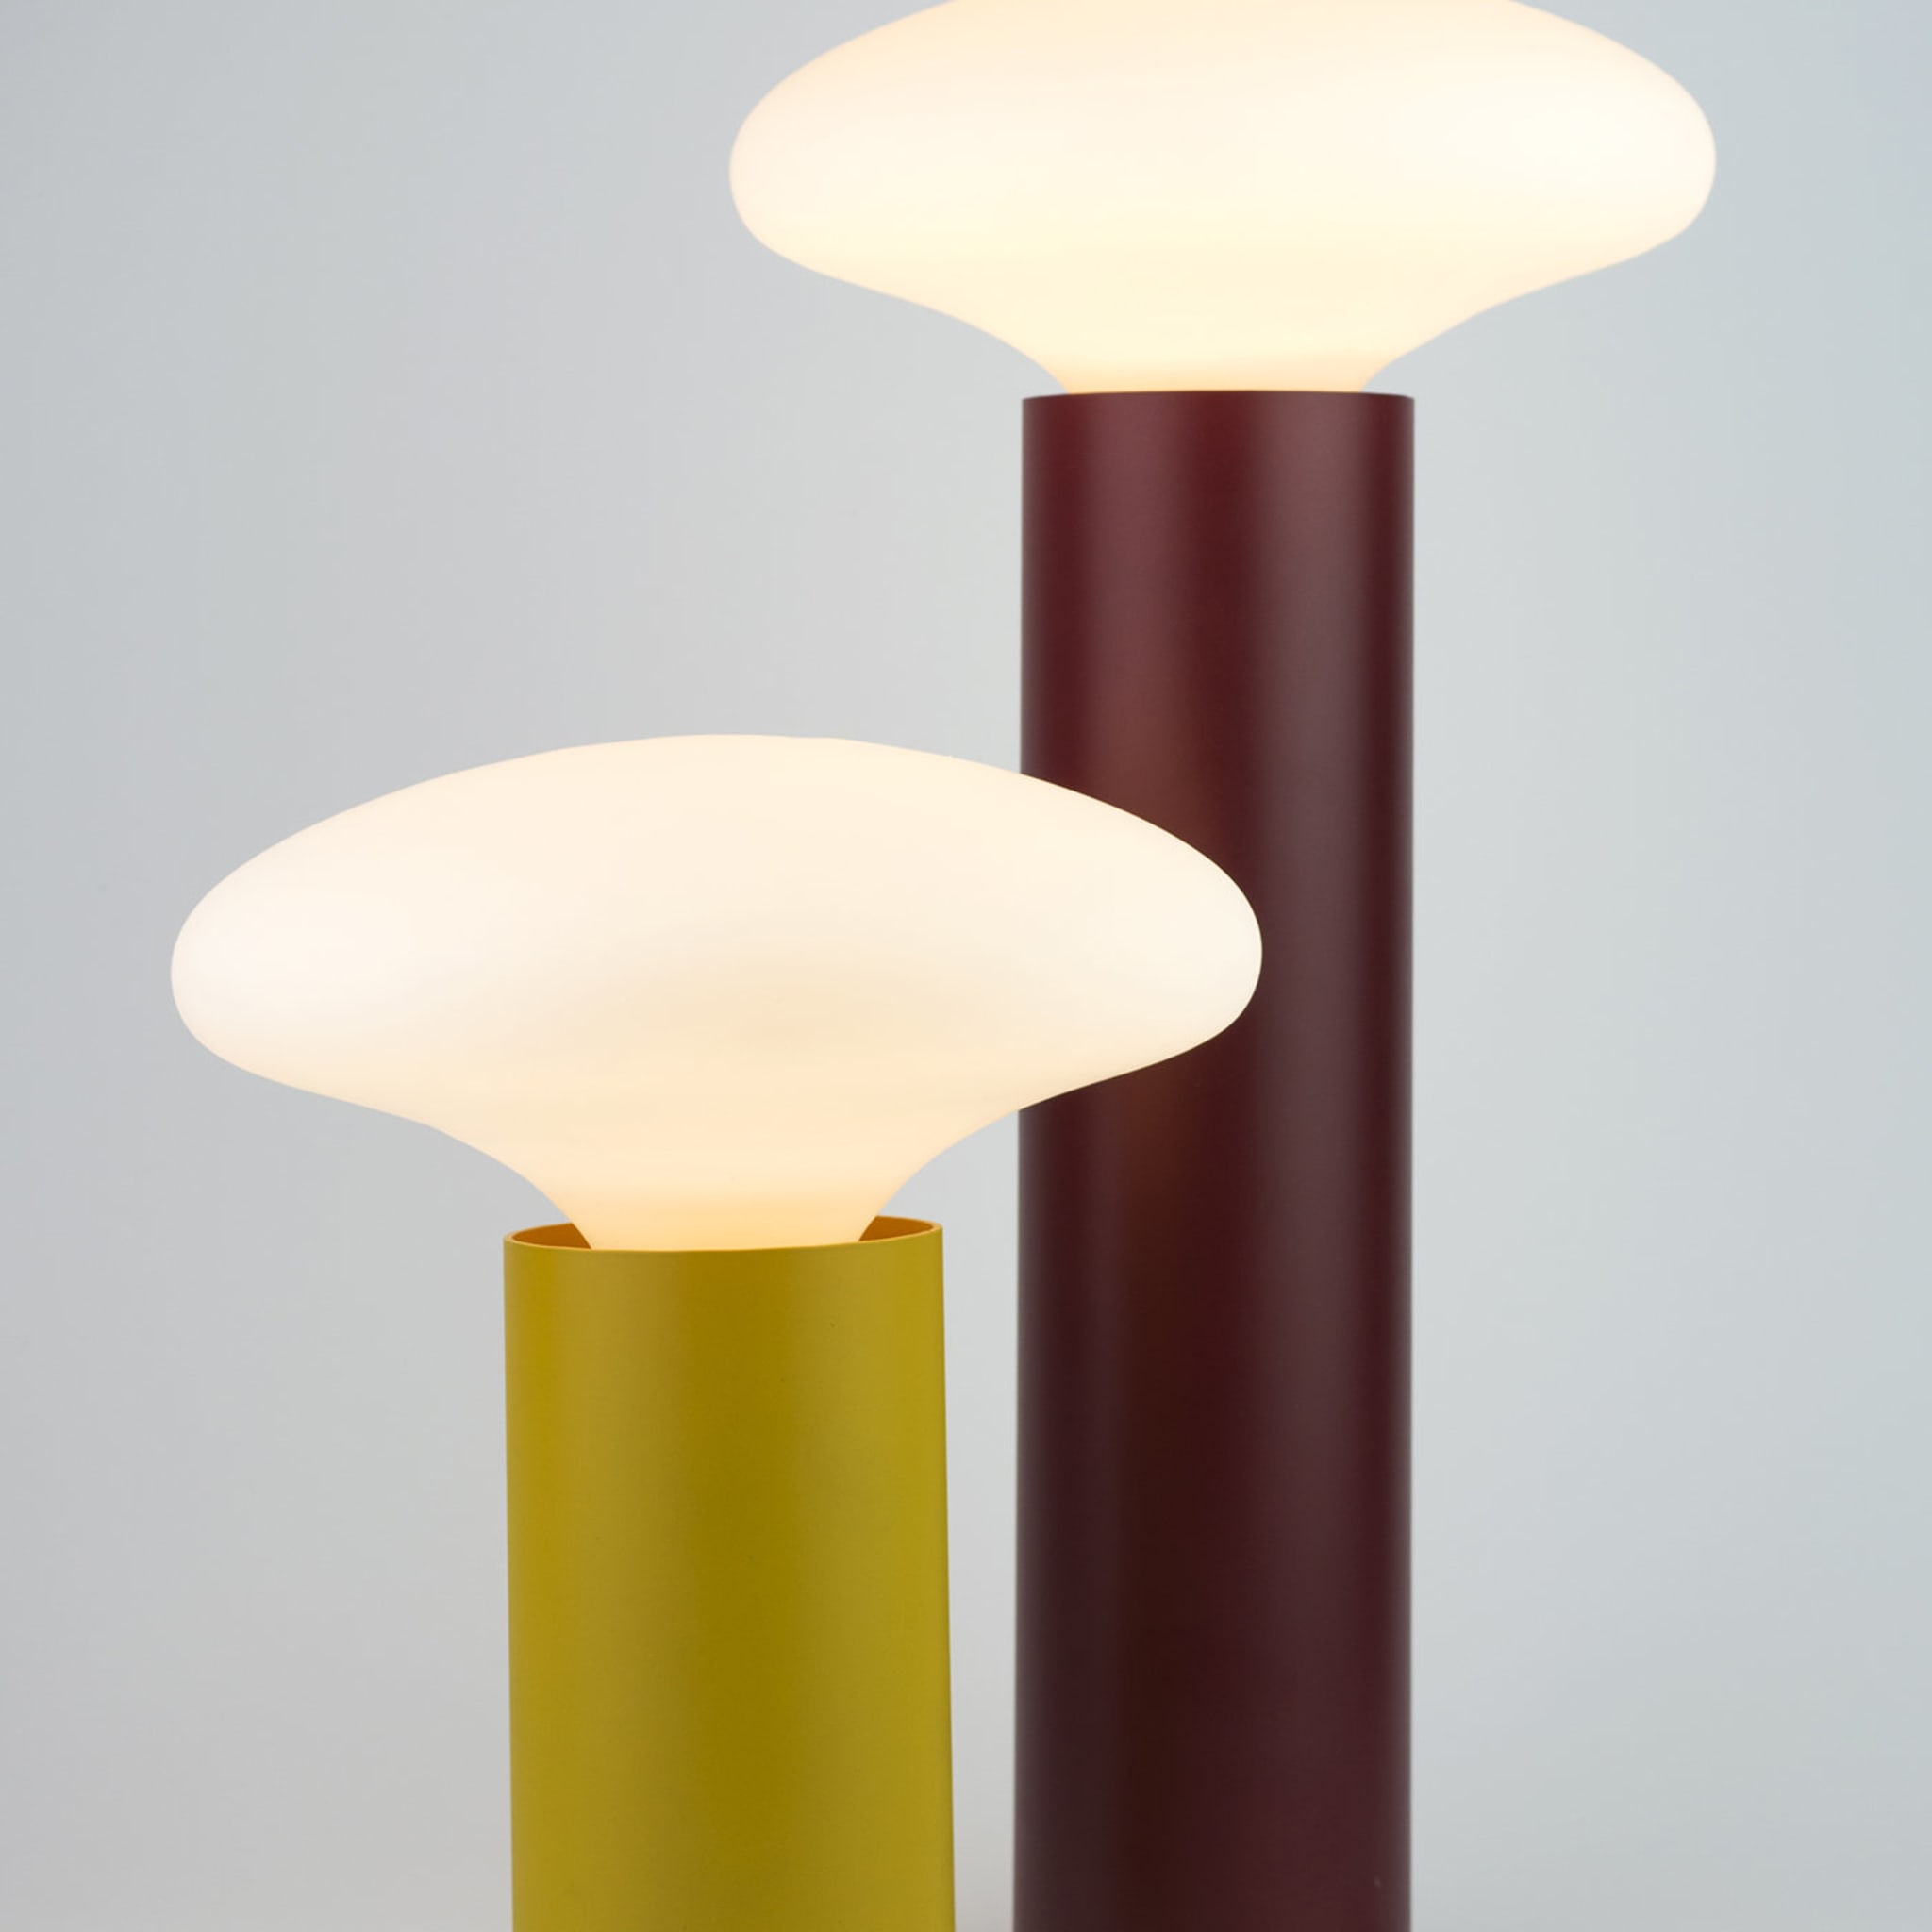 Stem Floor Lamp by Alalda Design - Alternative view 3